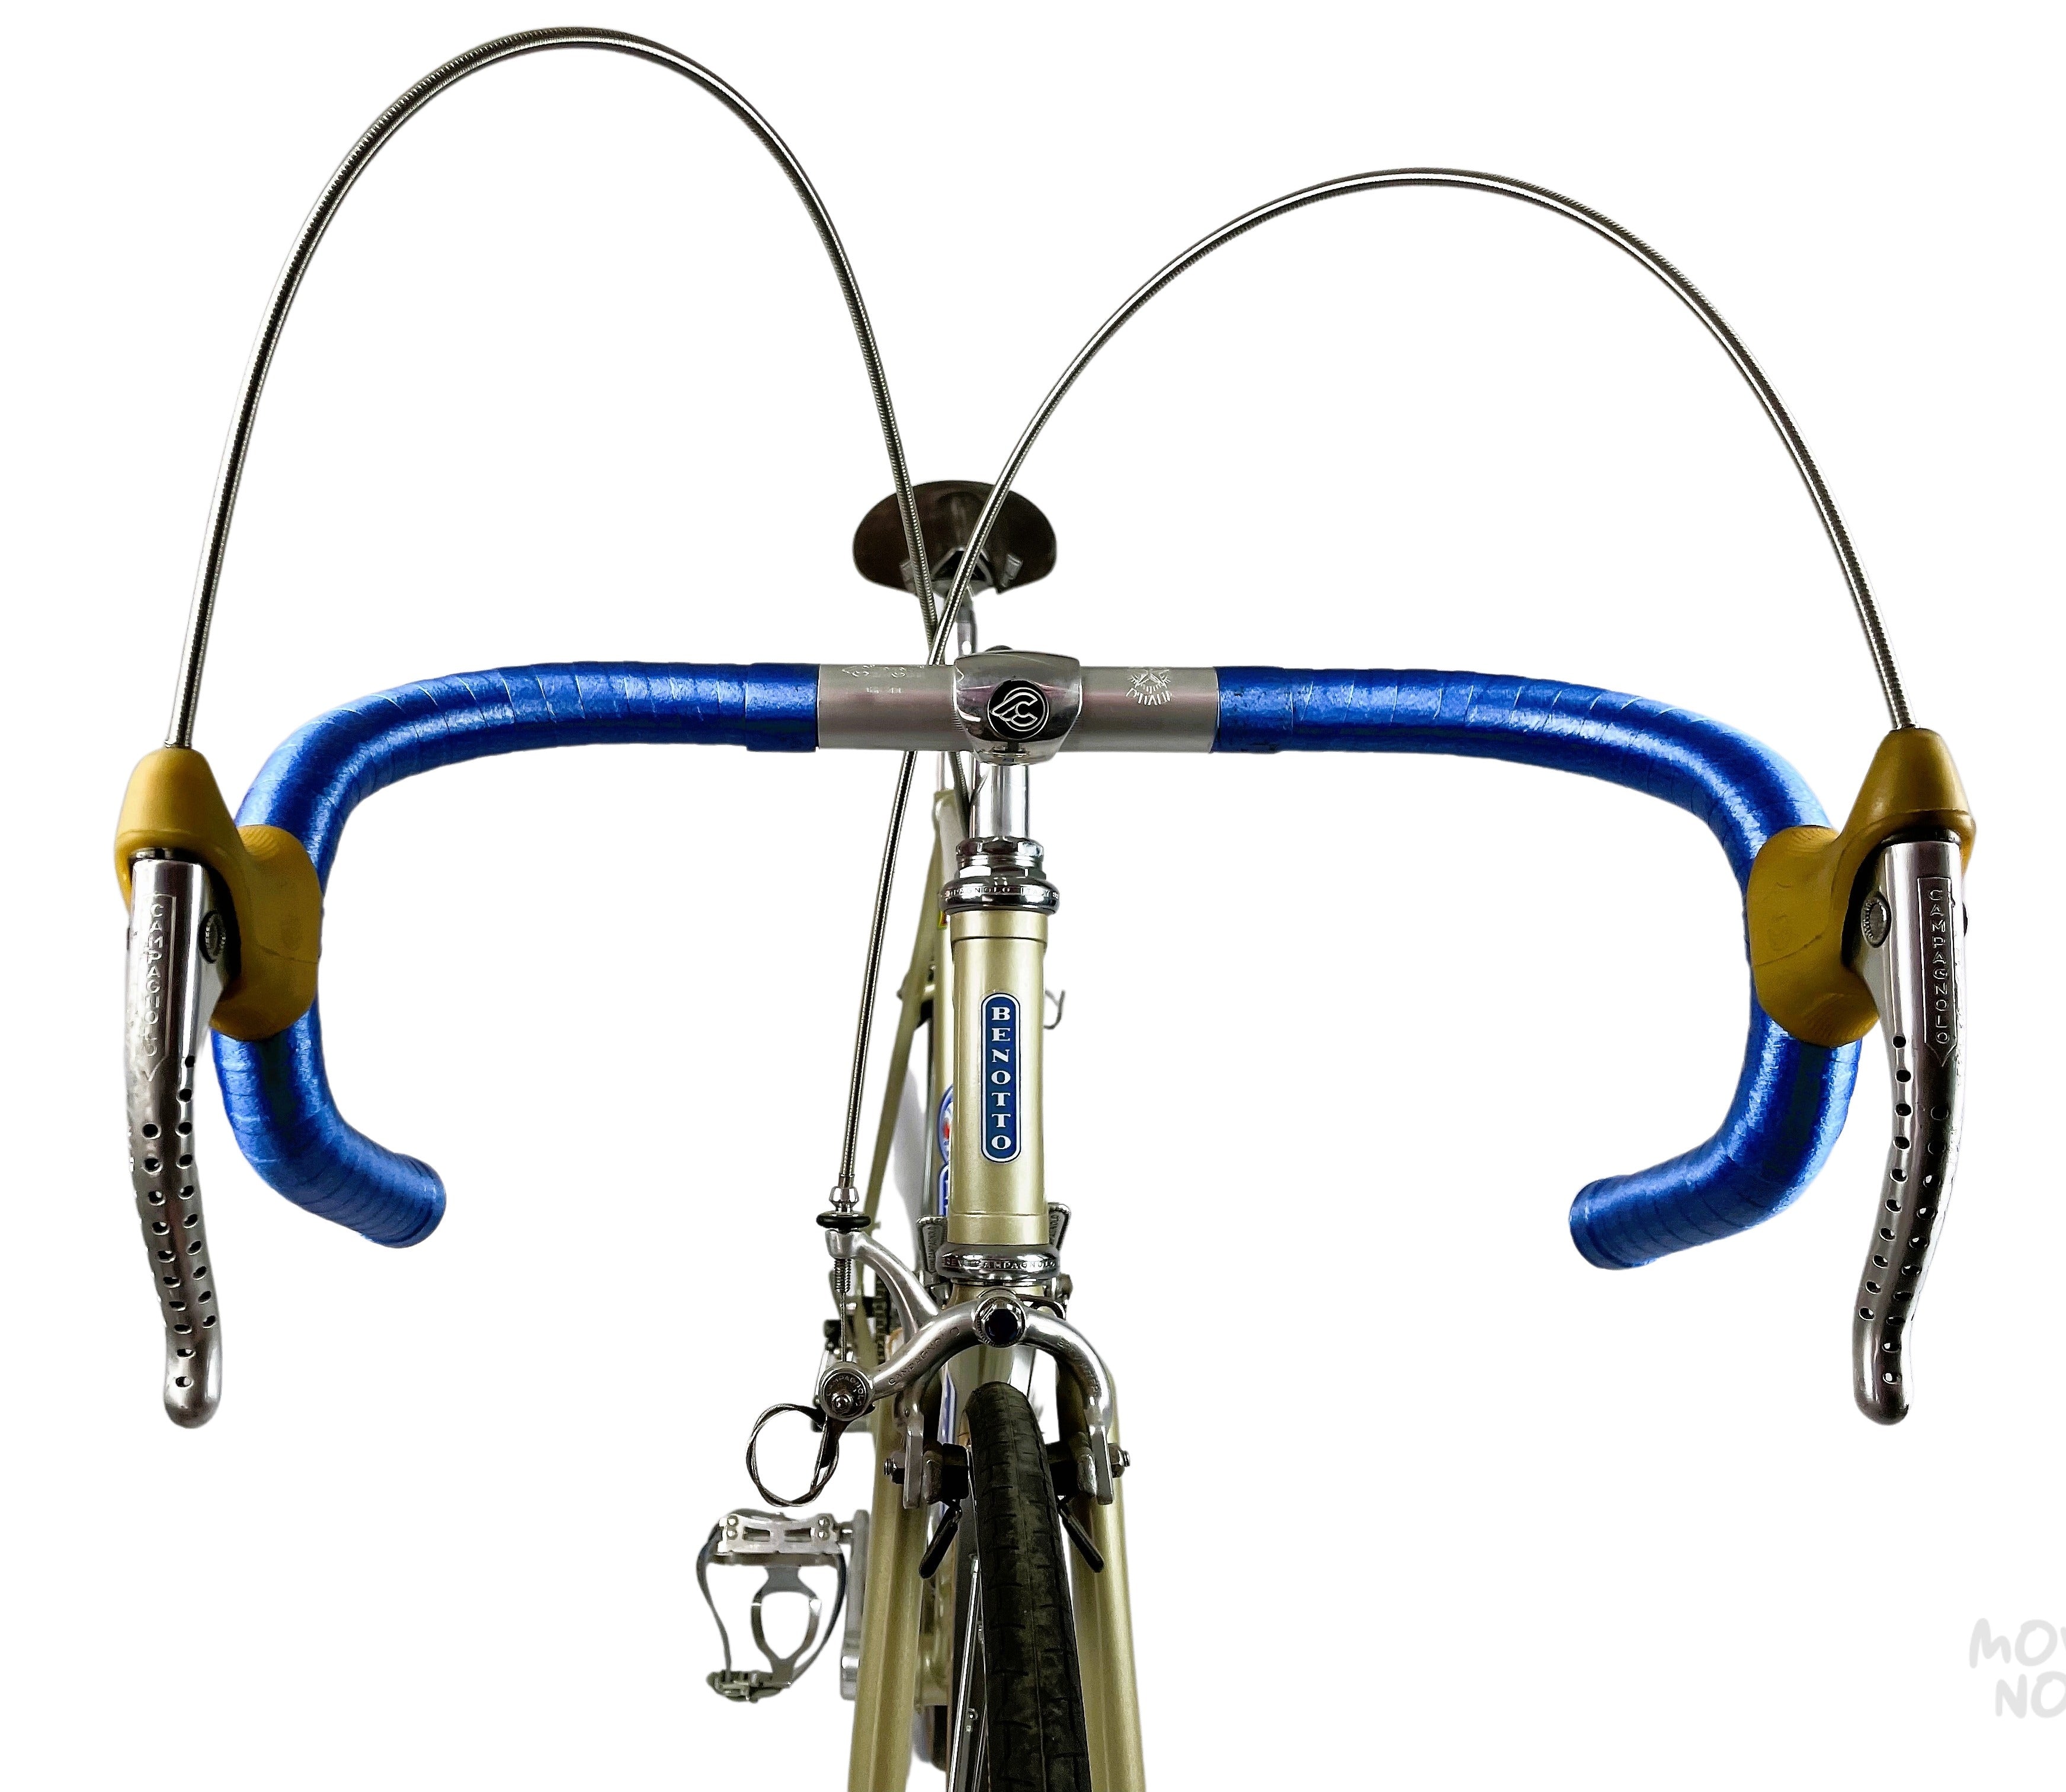 Benotto Águila de Táchira 1977 - 54 - Bicycles